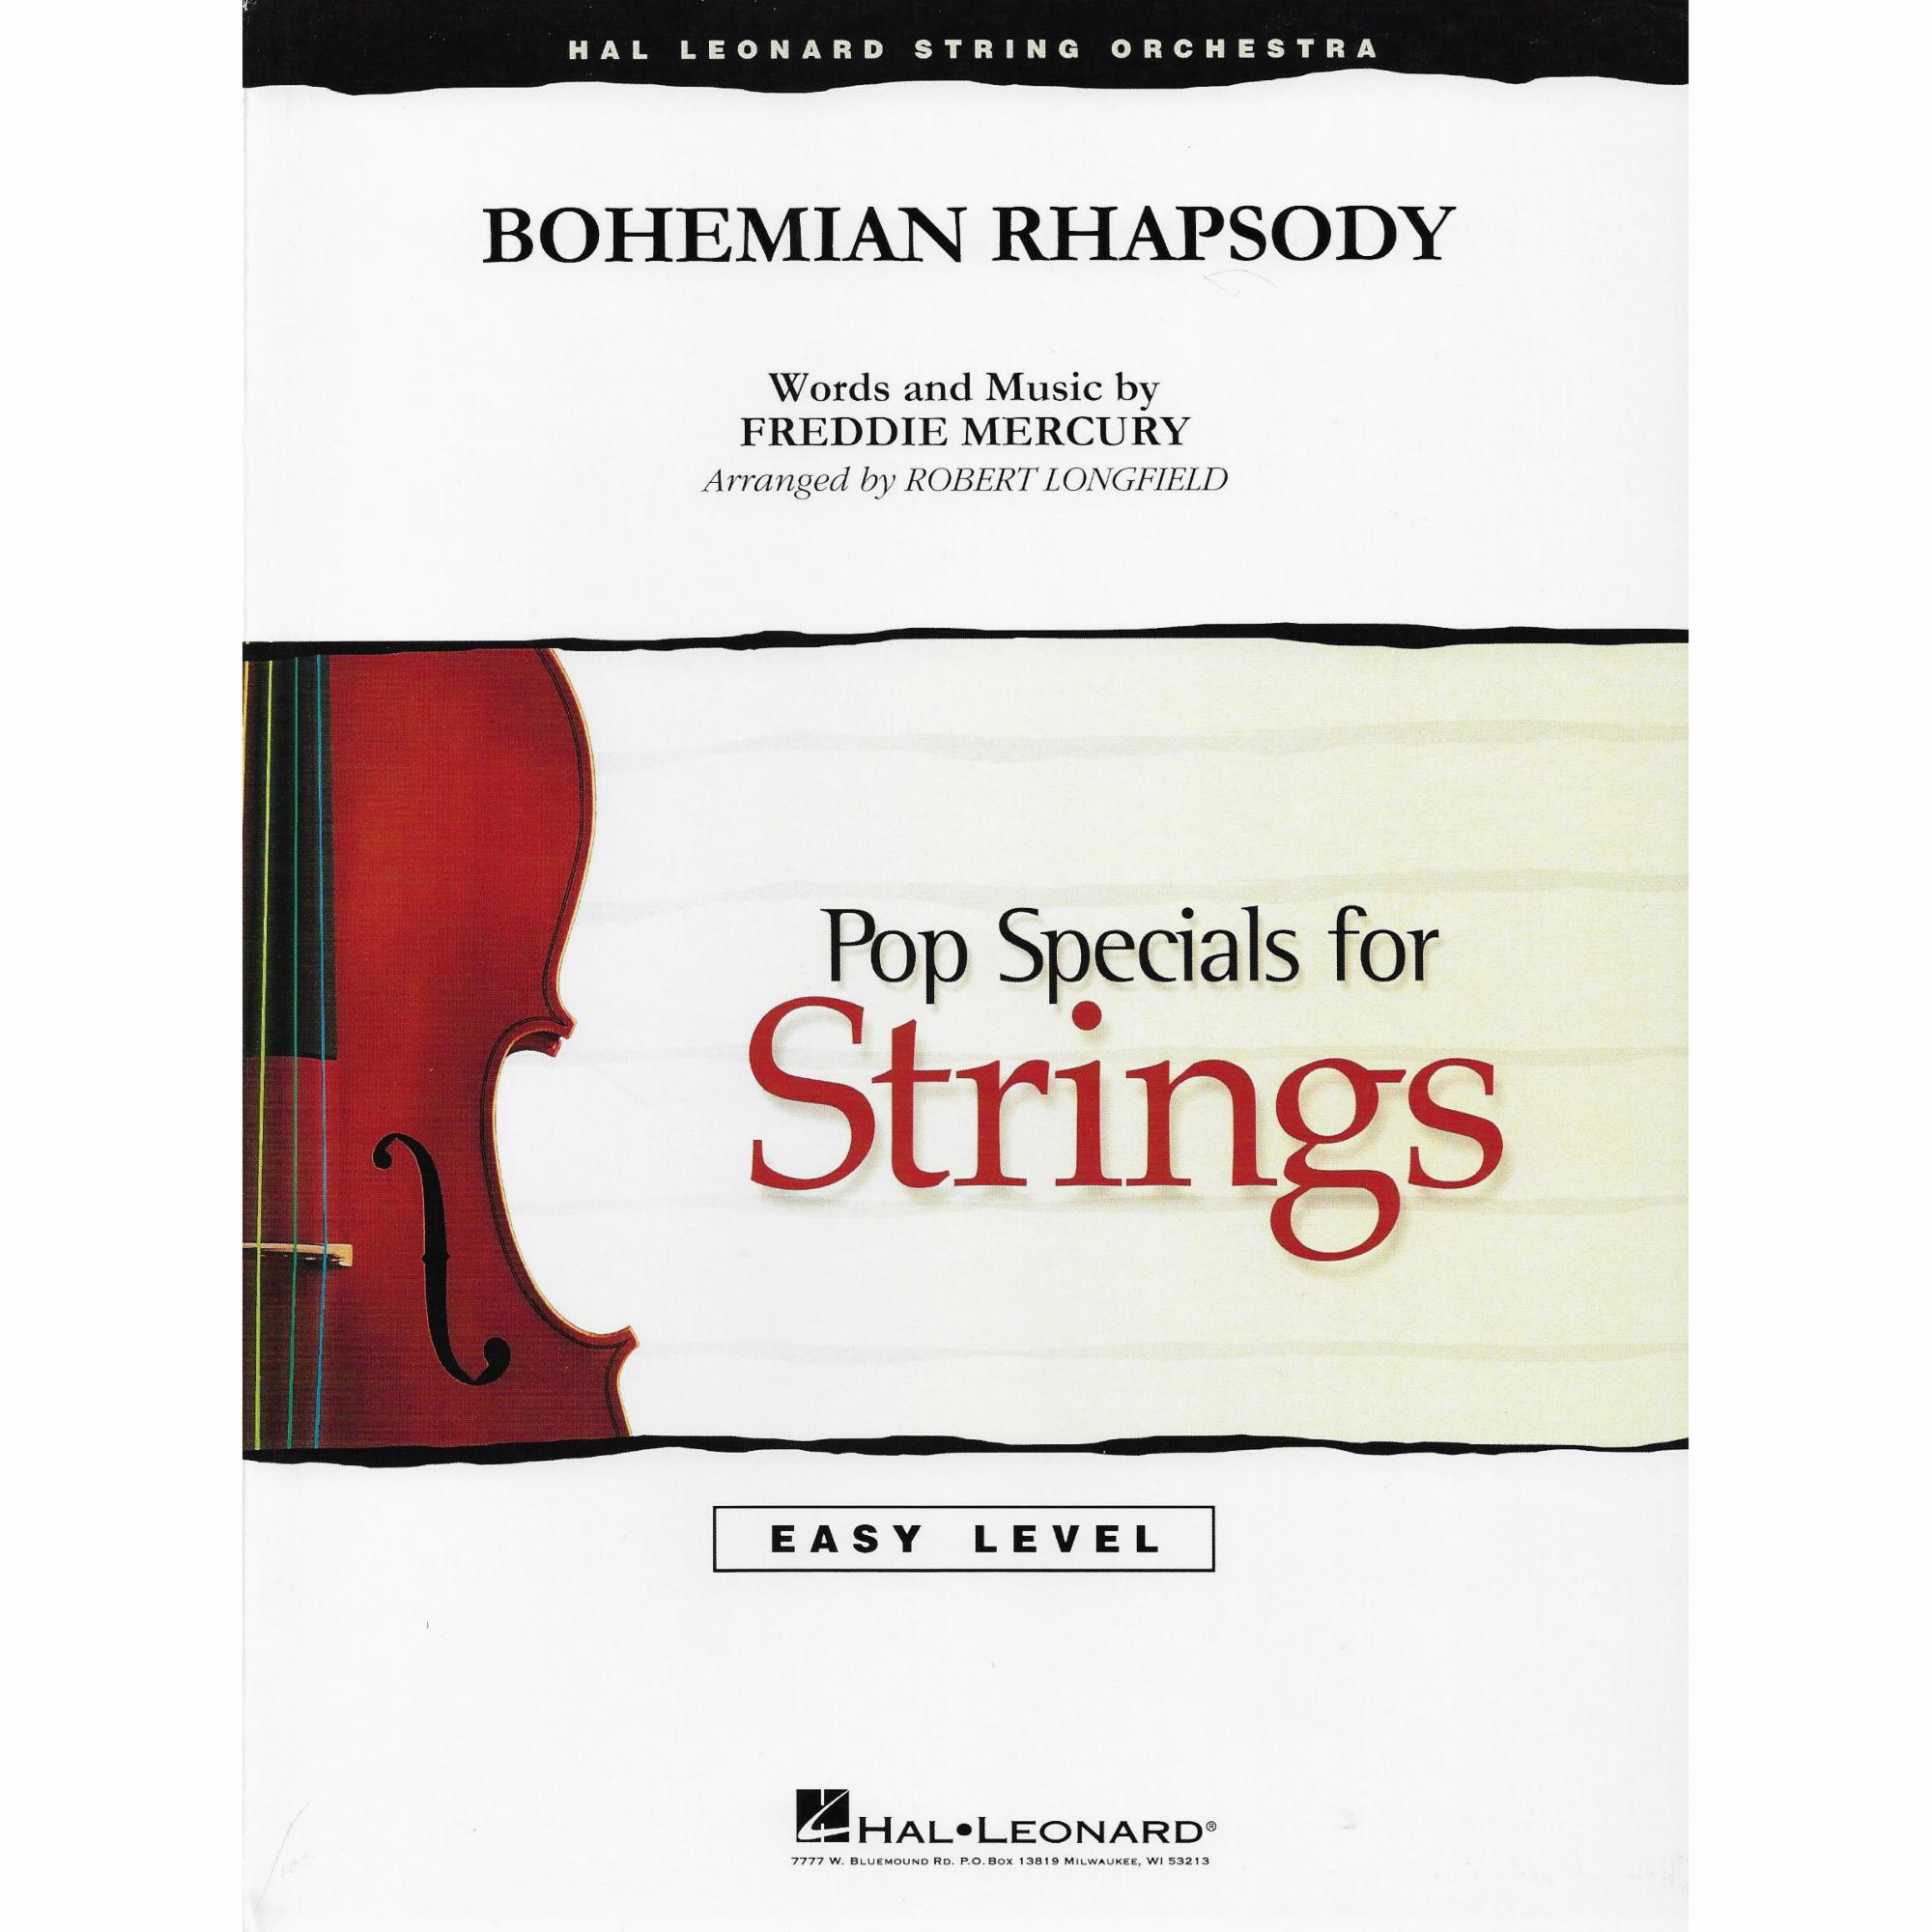 Bohemian Rhapsody for String Orchestra